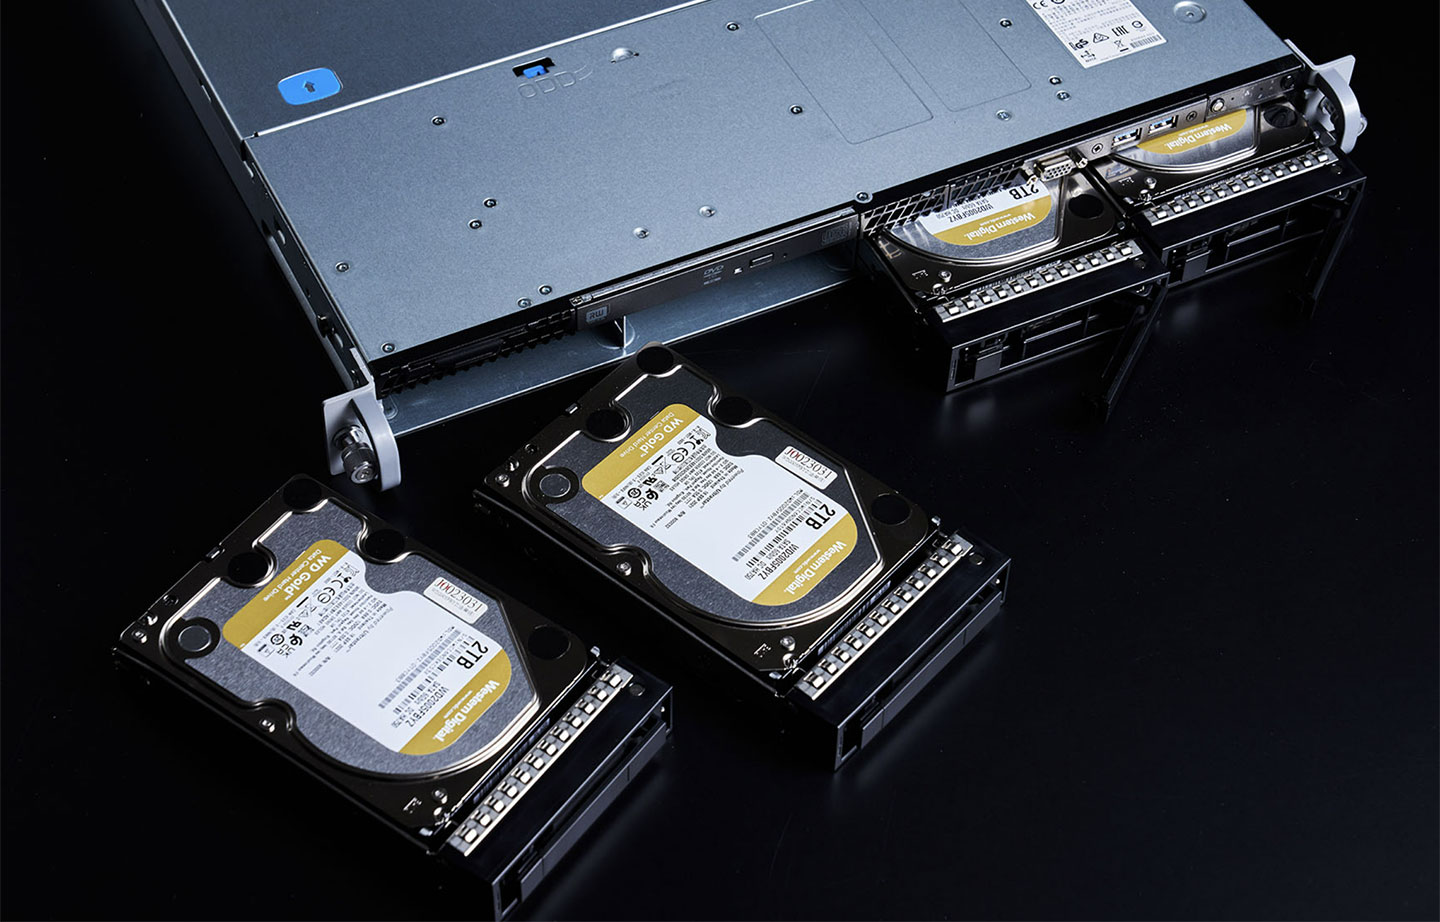 Genuine 捷元 RX2120 1U 機架伺服系統配置了四顆單碟 2TB 的 WD Gold 硬碟。